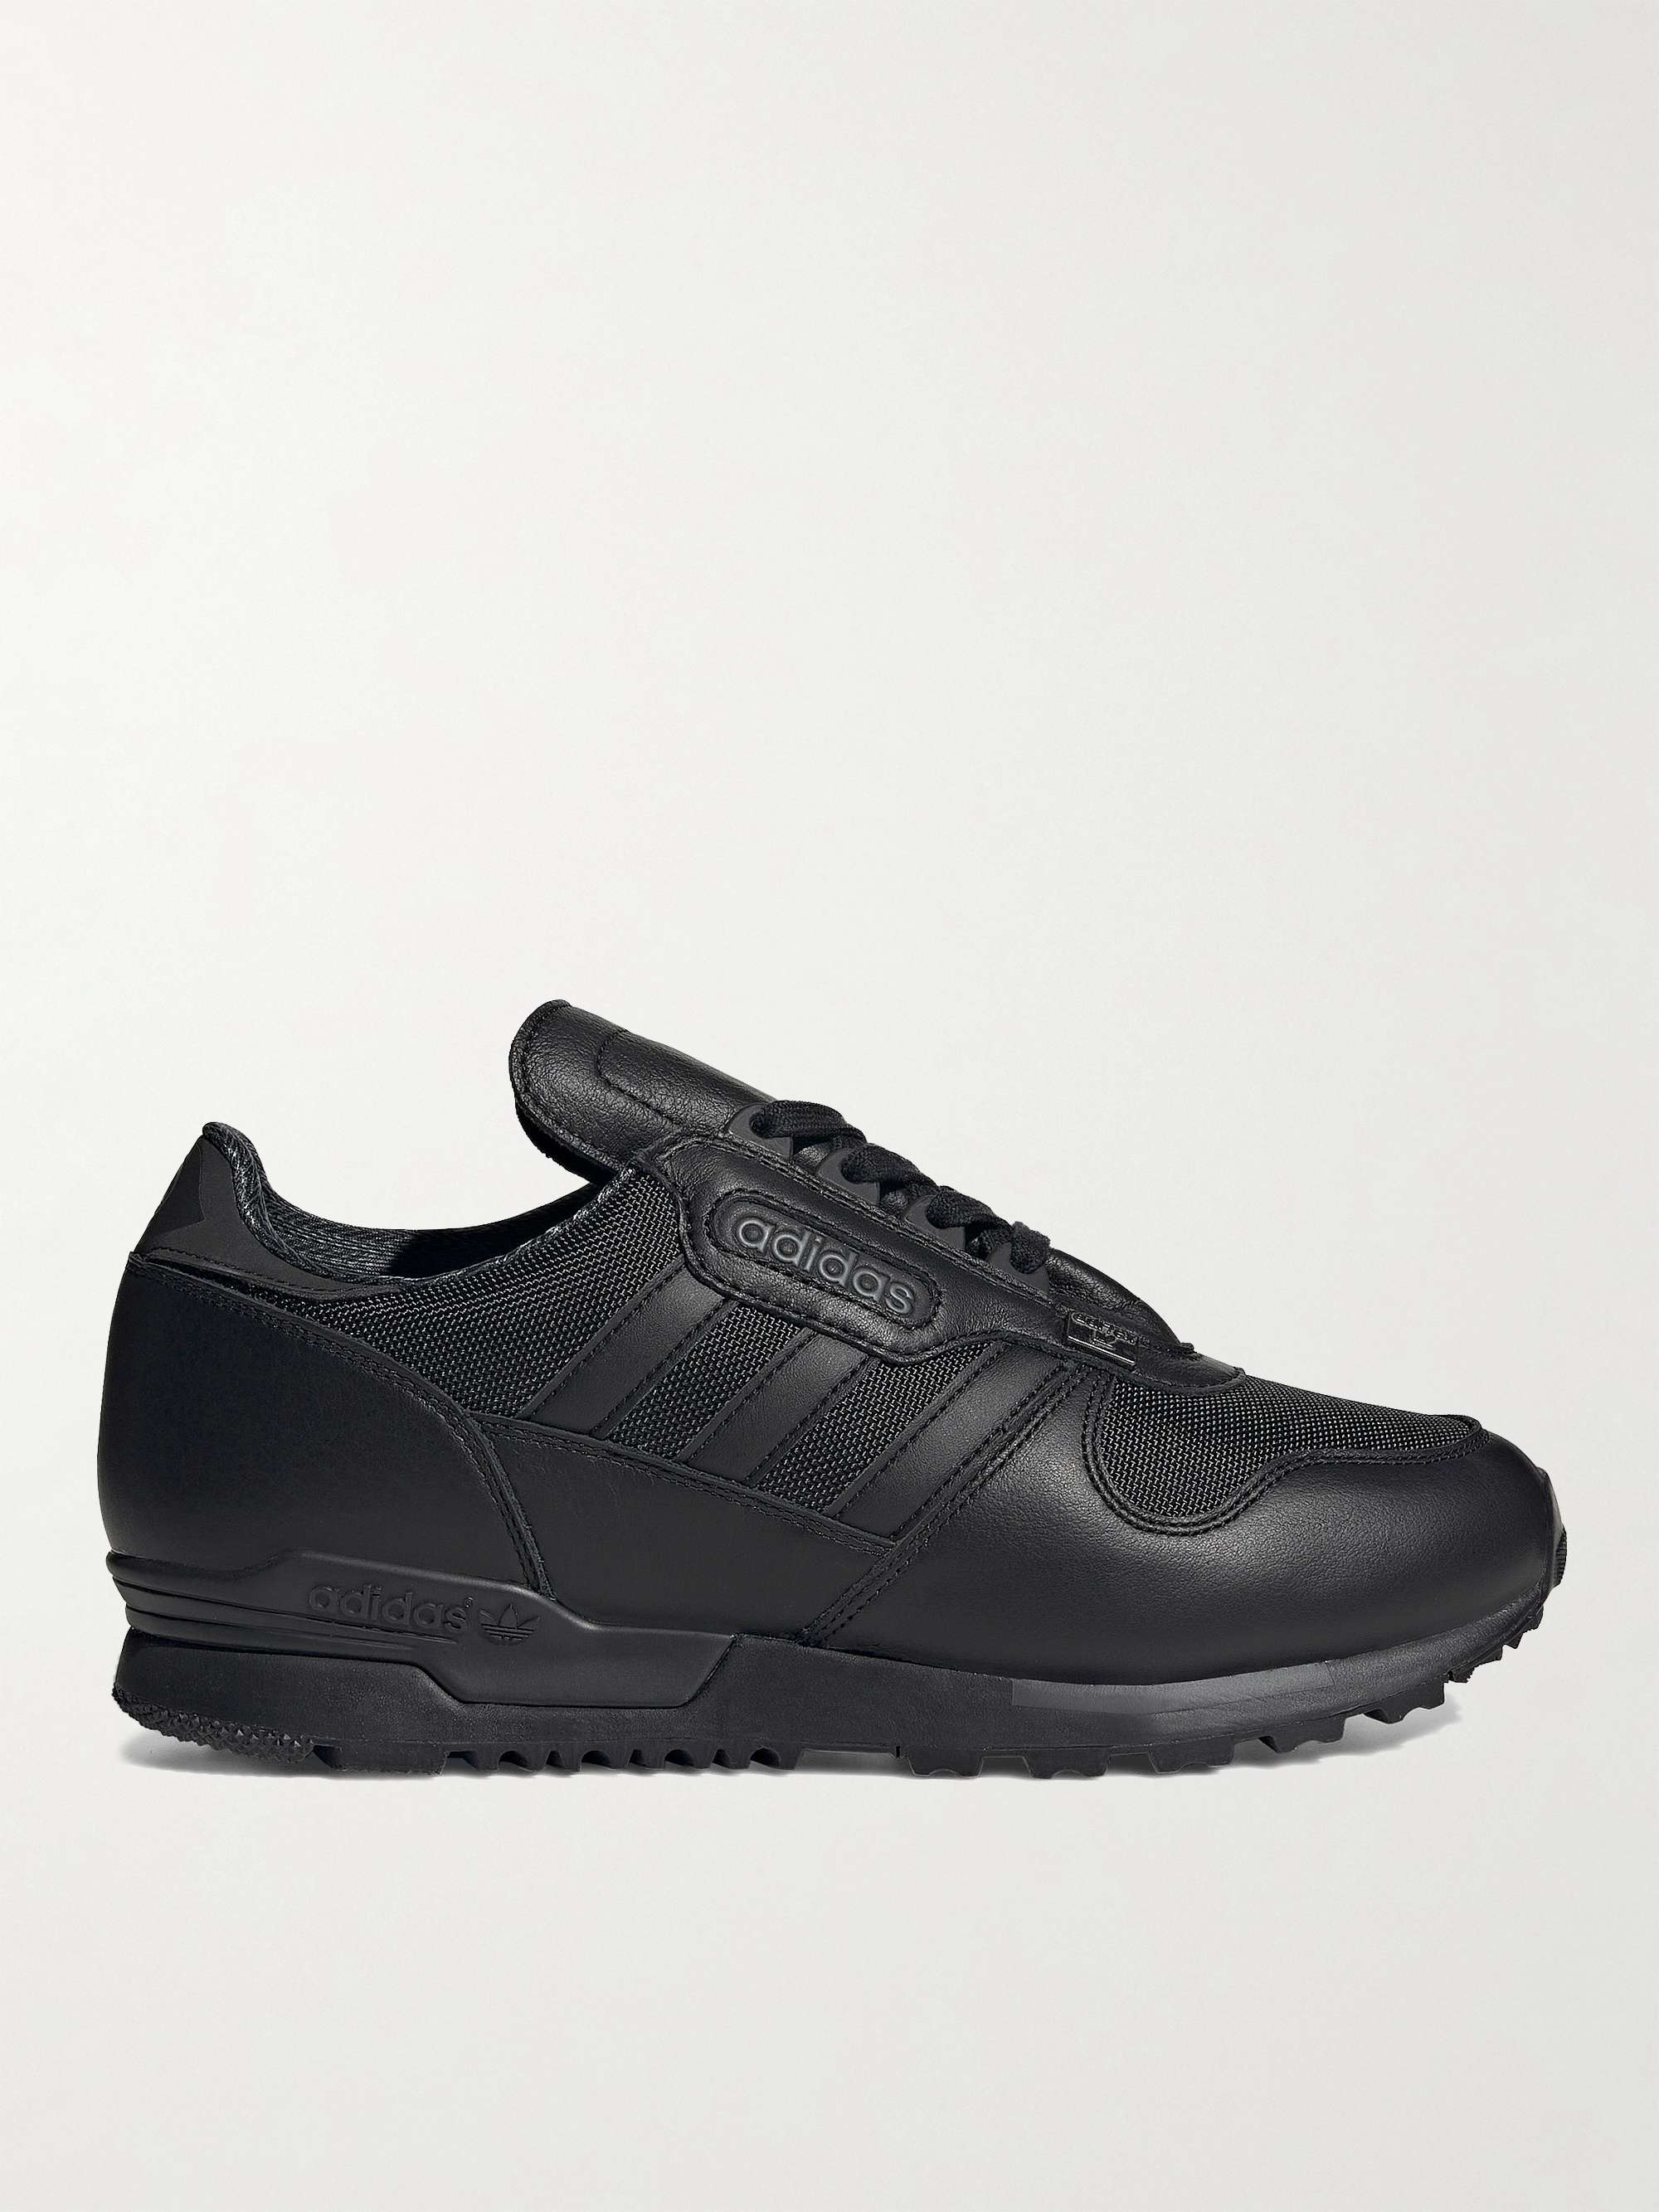 ADIDAS CONSORTIUM Hartness SPZL Leather and Mesh Sneakers for Men | MR  PORTER